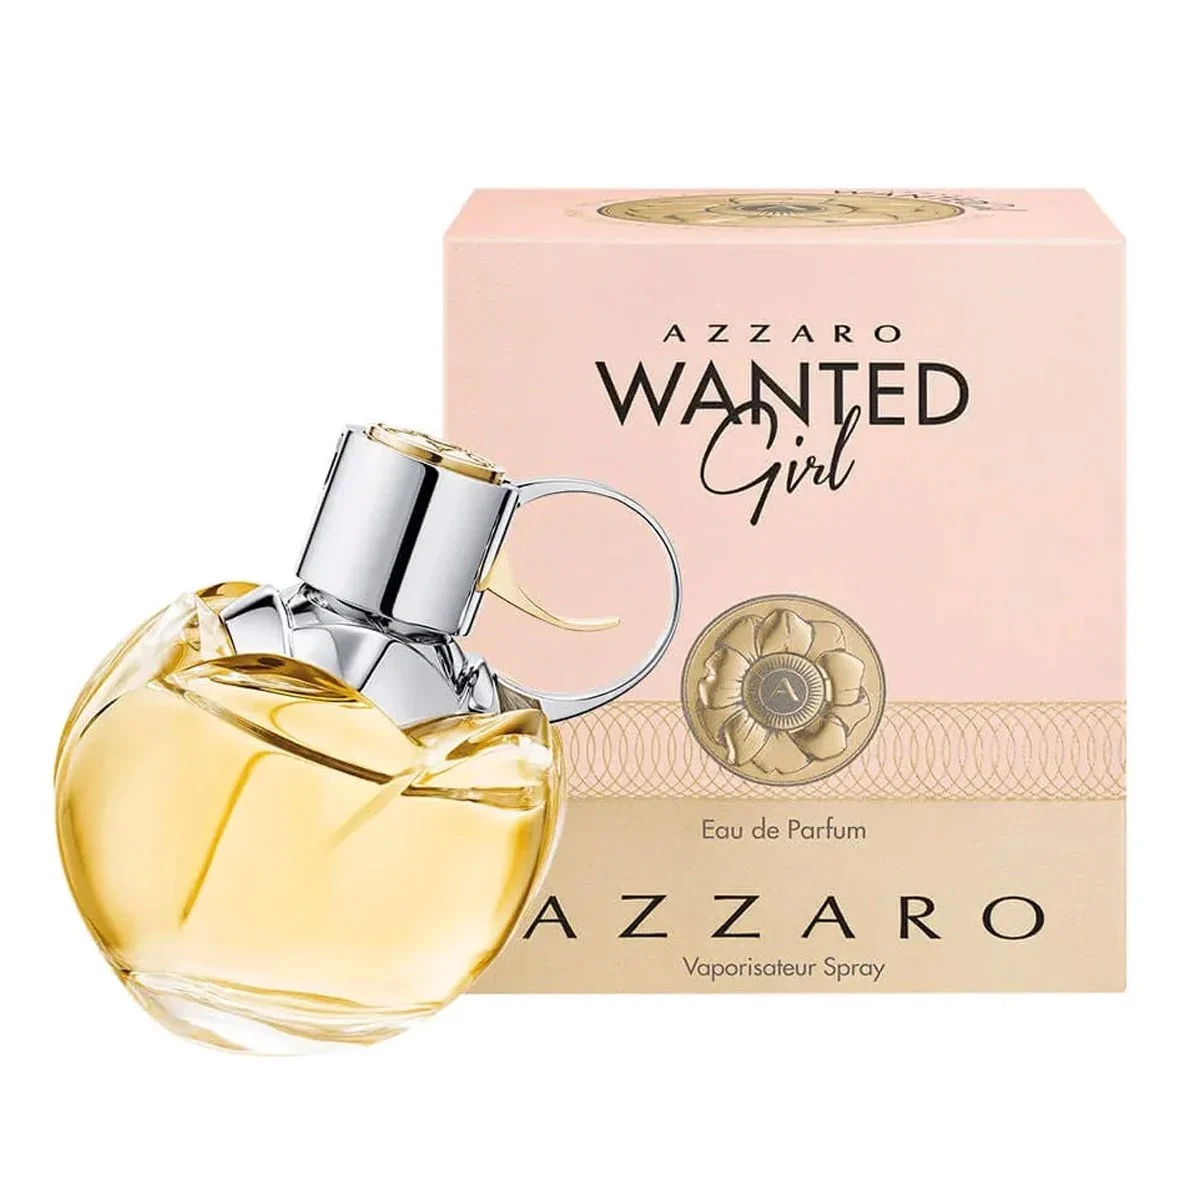  Azzaro Wanted Girl Eau De Parfum Vaporisateur Spray 30ml 